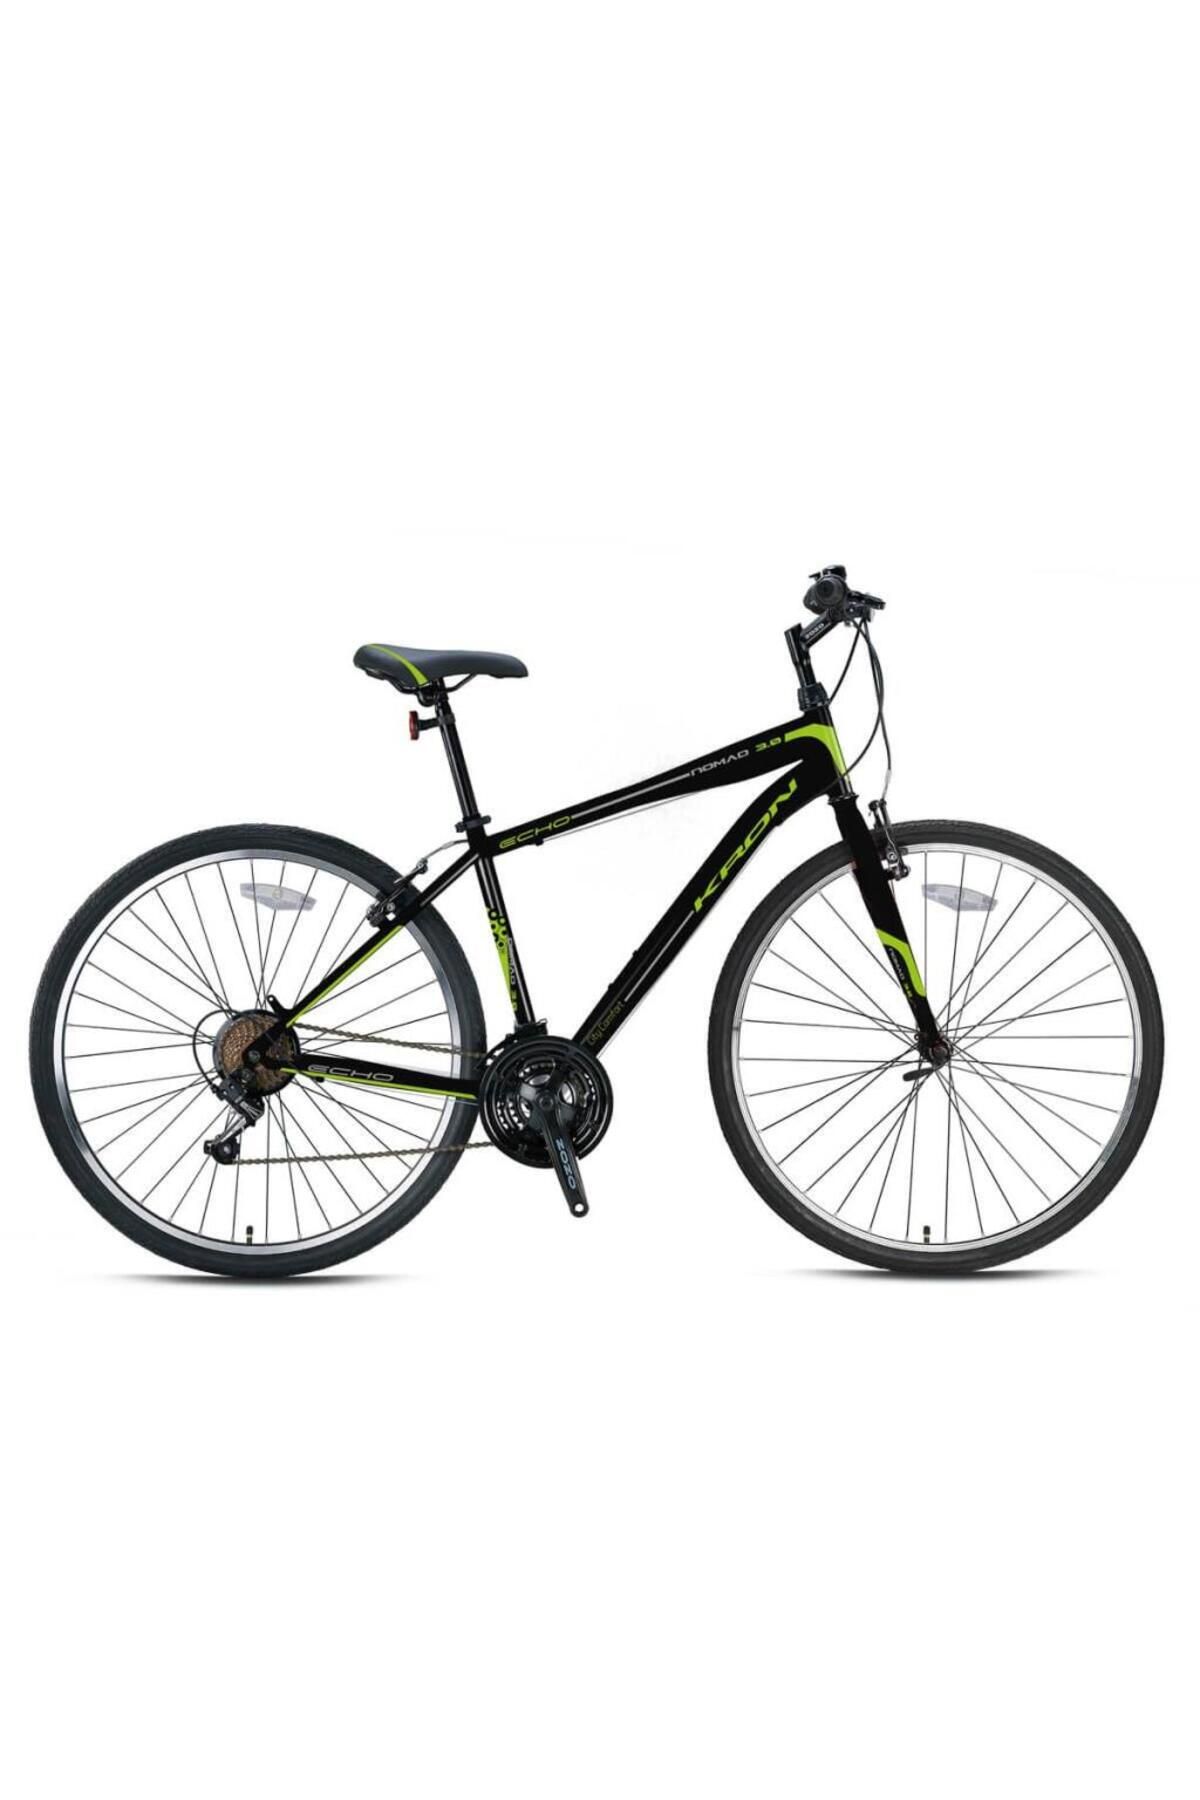 Kron Nomad 3.0 V-fren 28 Jant 21 Vites 18 Inç Şehir Bisiklet 2021 Model Mat Siyah - Yeşil